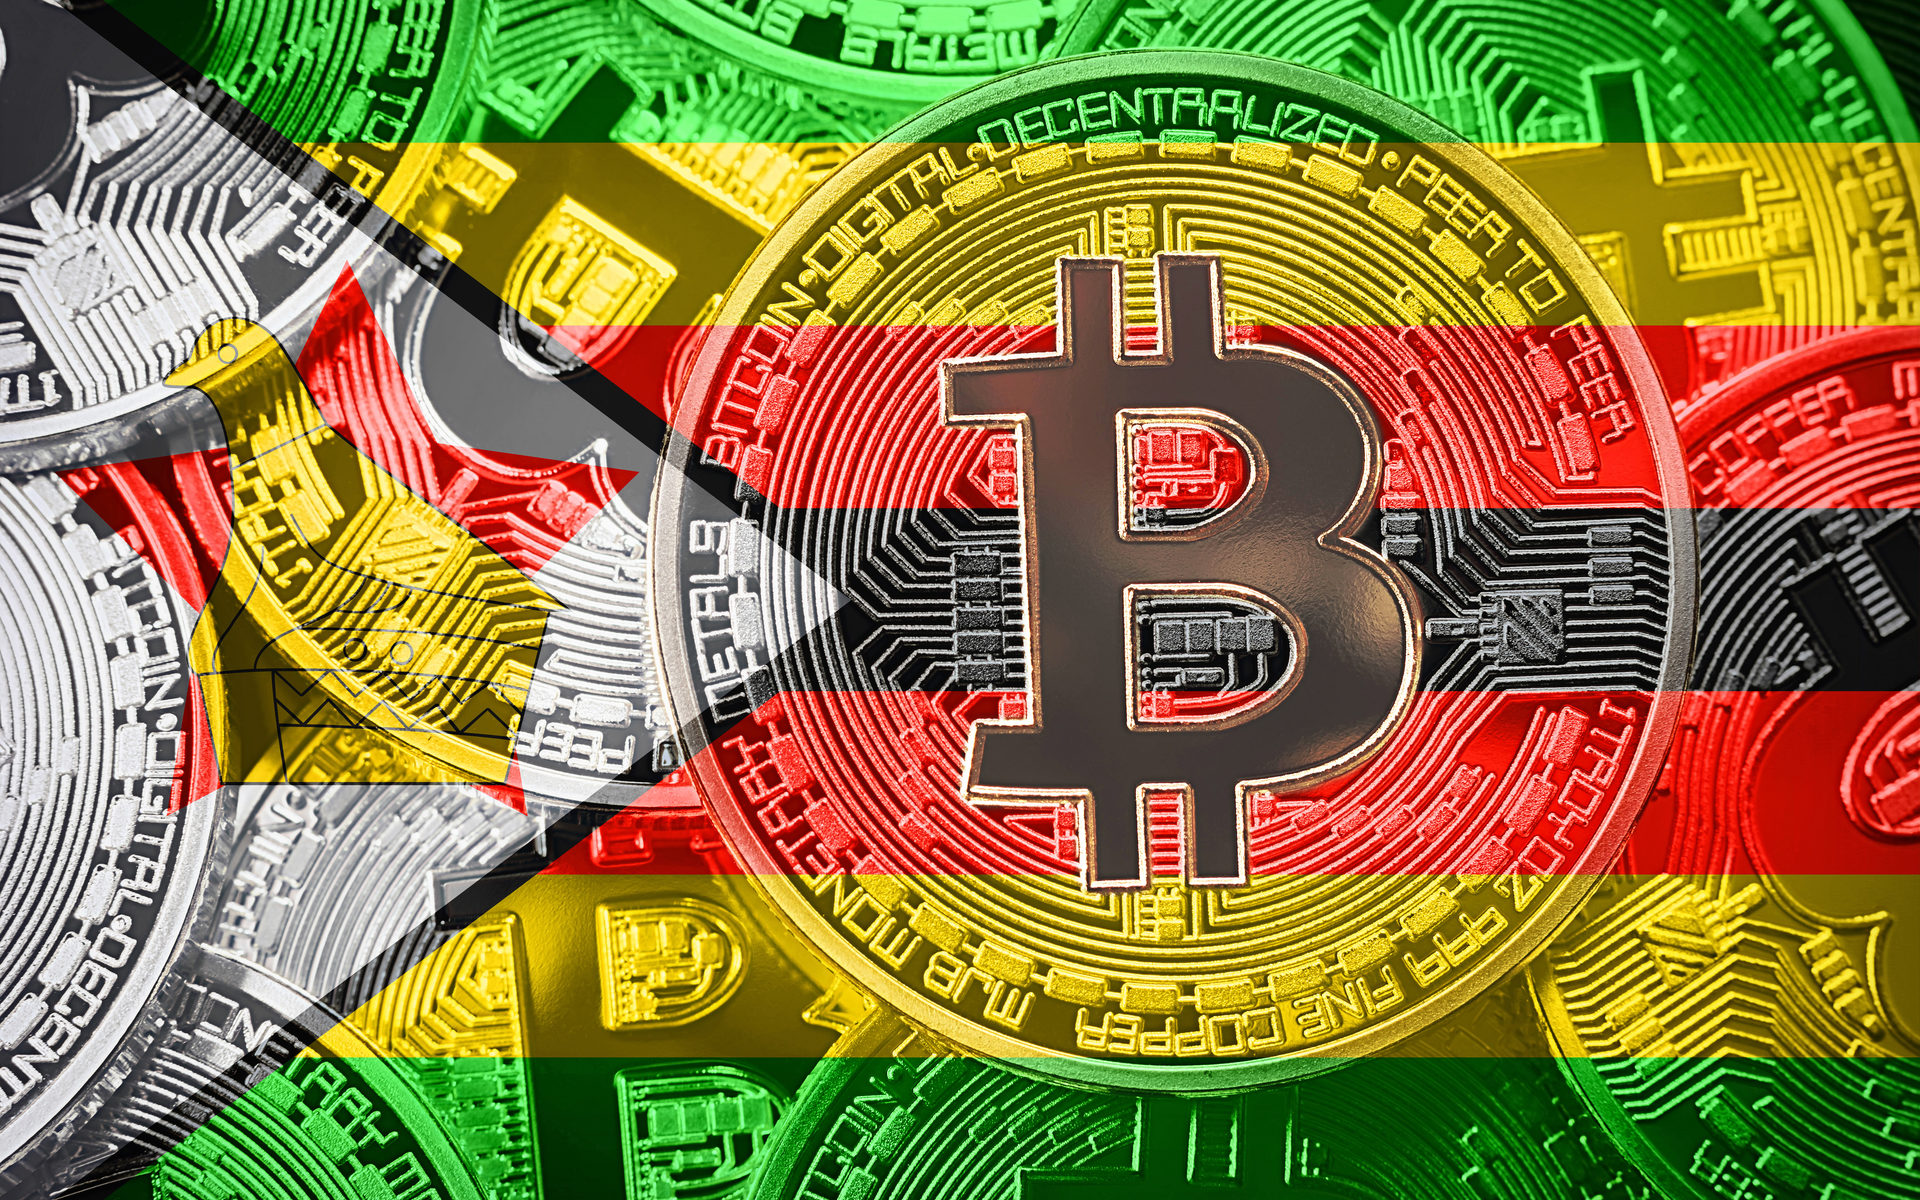 bitcoin use rising in zimbabwe